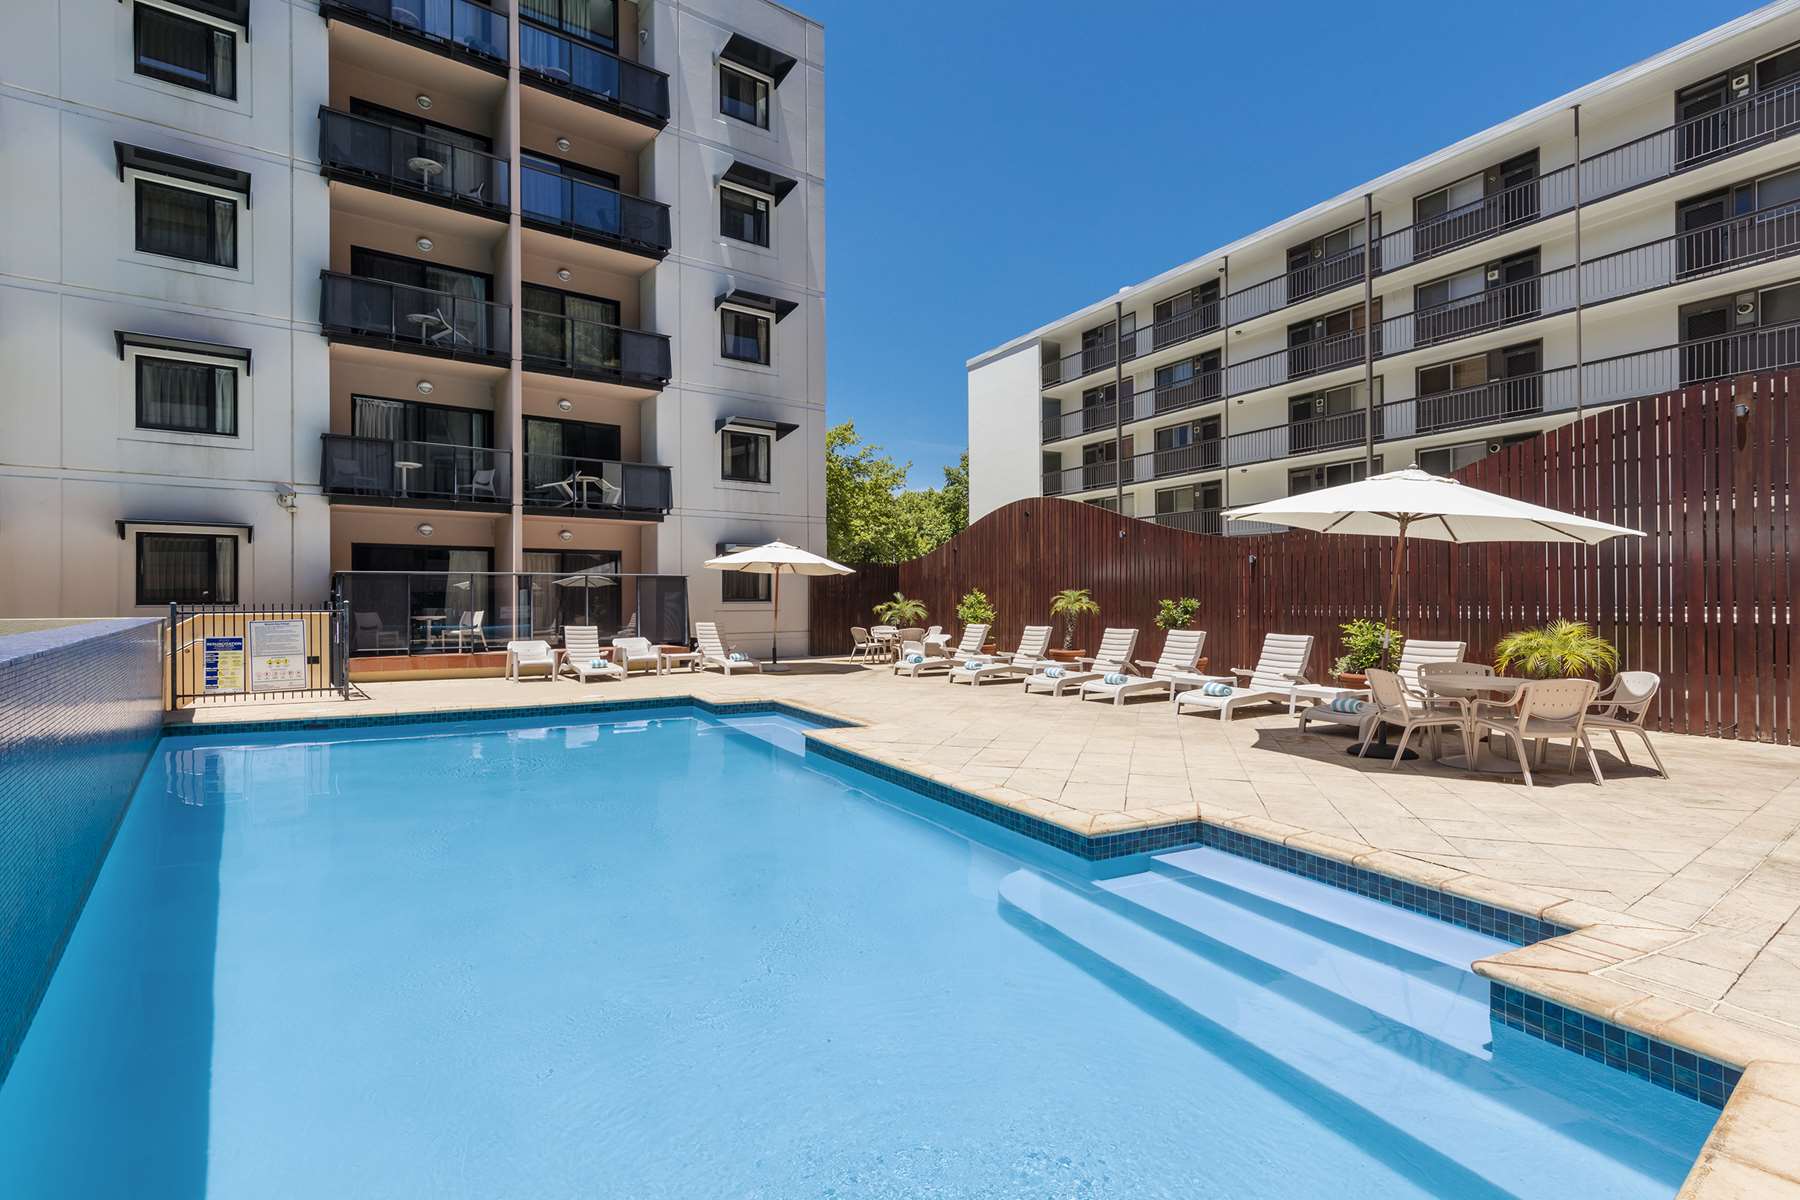 Pool at Nesuto Mounts Bay Apartment Hotel Nesuto Mounts Bay Apartment Hotel Perth (08) 9213 5333